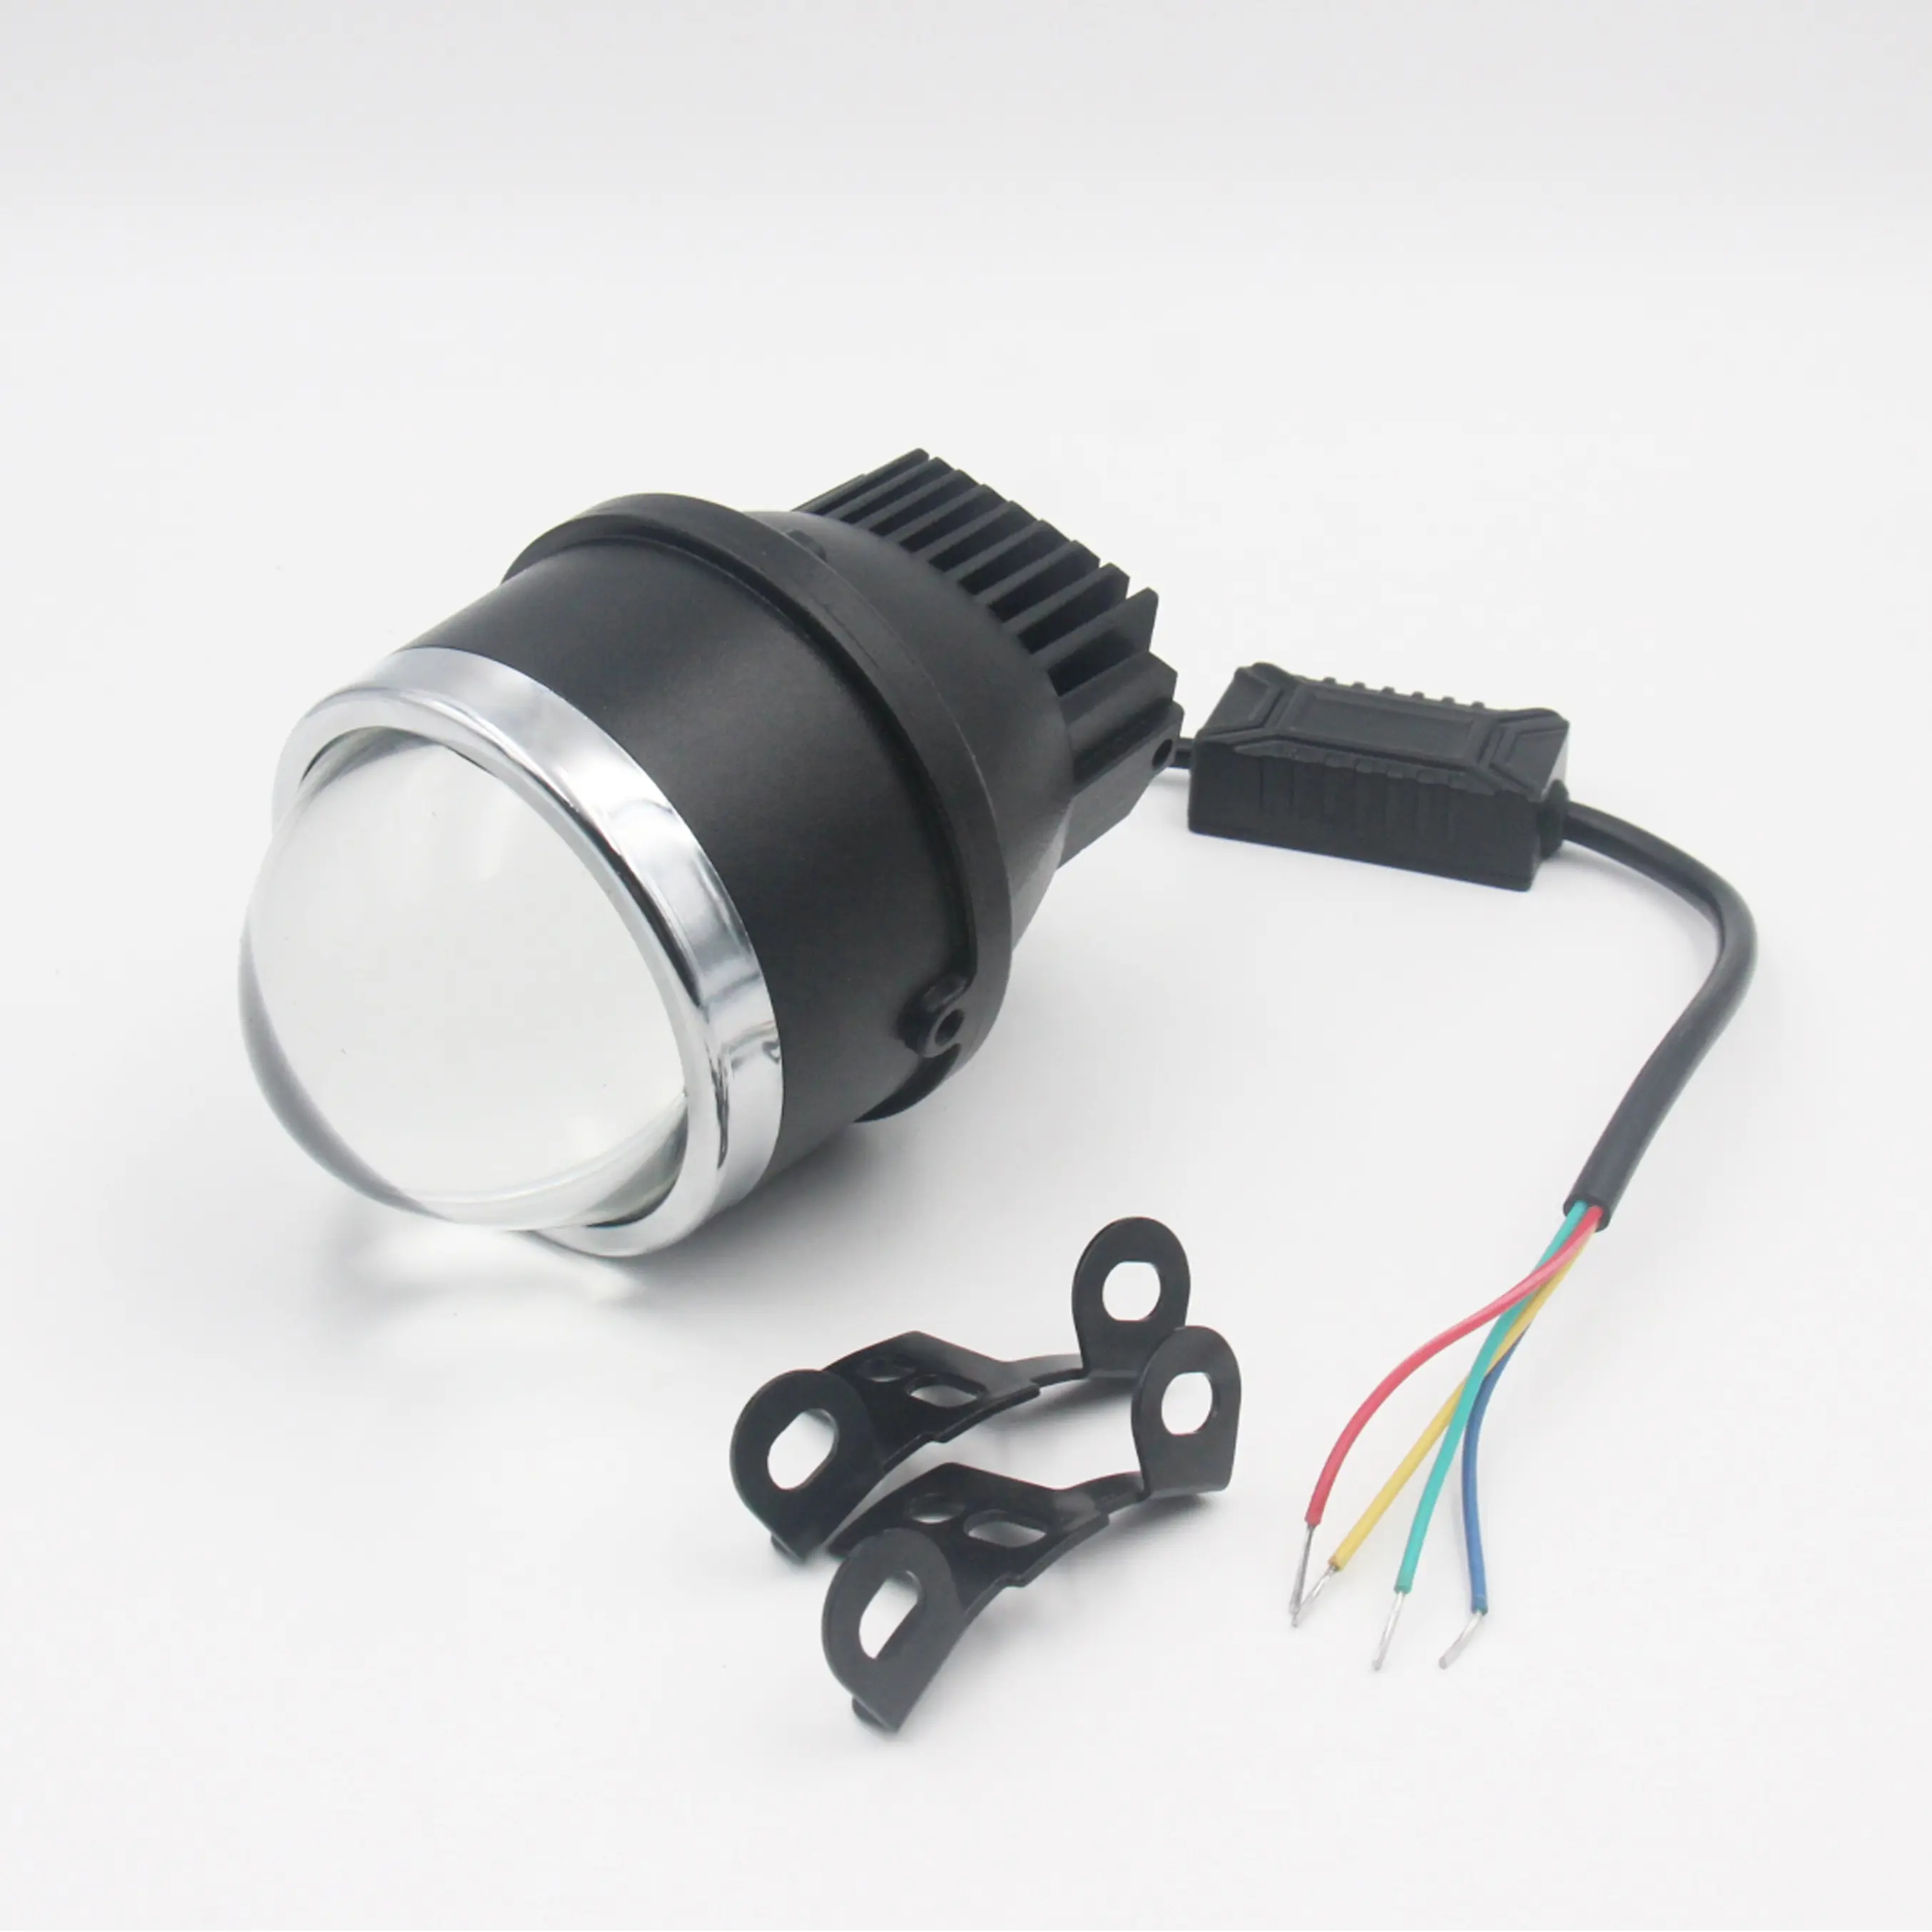 Förderung Preis 28W 3.0 ''Foglight LED Projektor Objektiv 6000K H typ IP67 Gewährt für Jedes Auto LED nebel Lampe